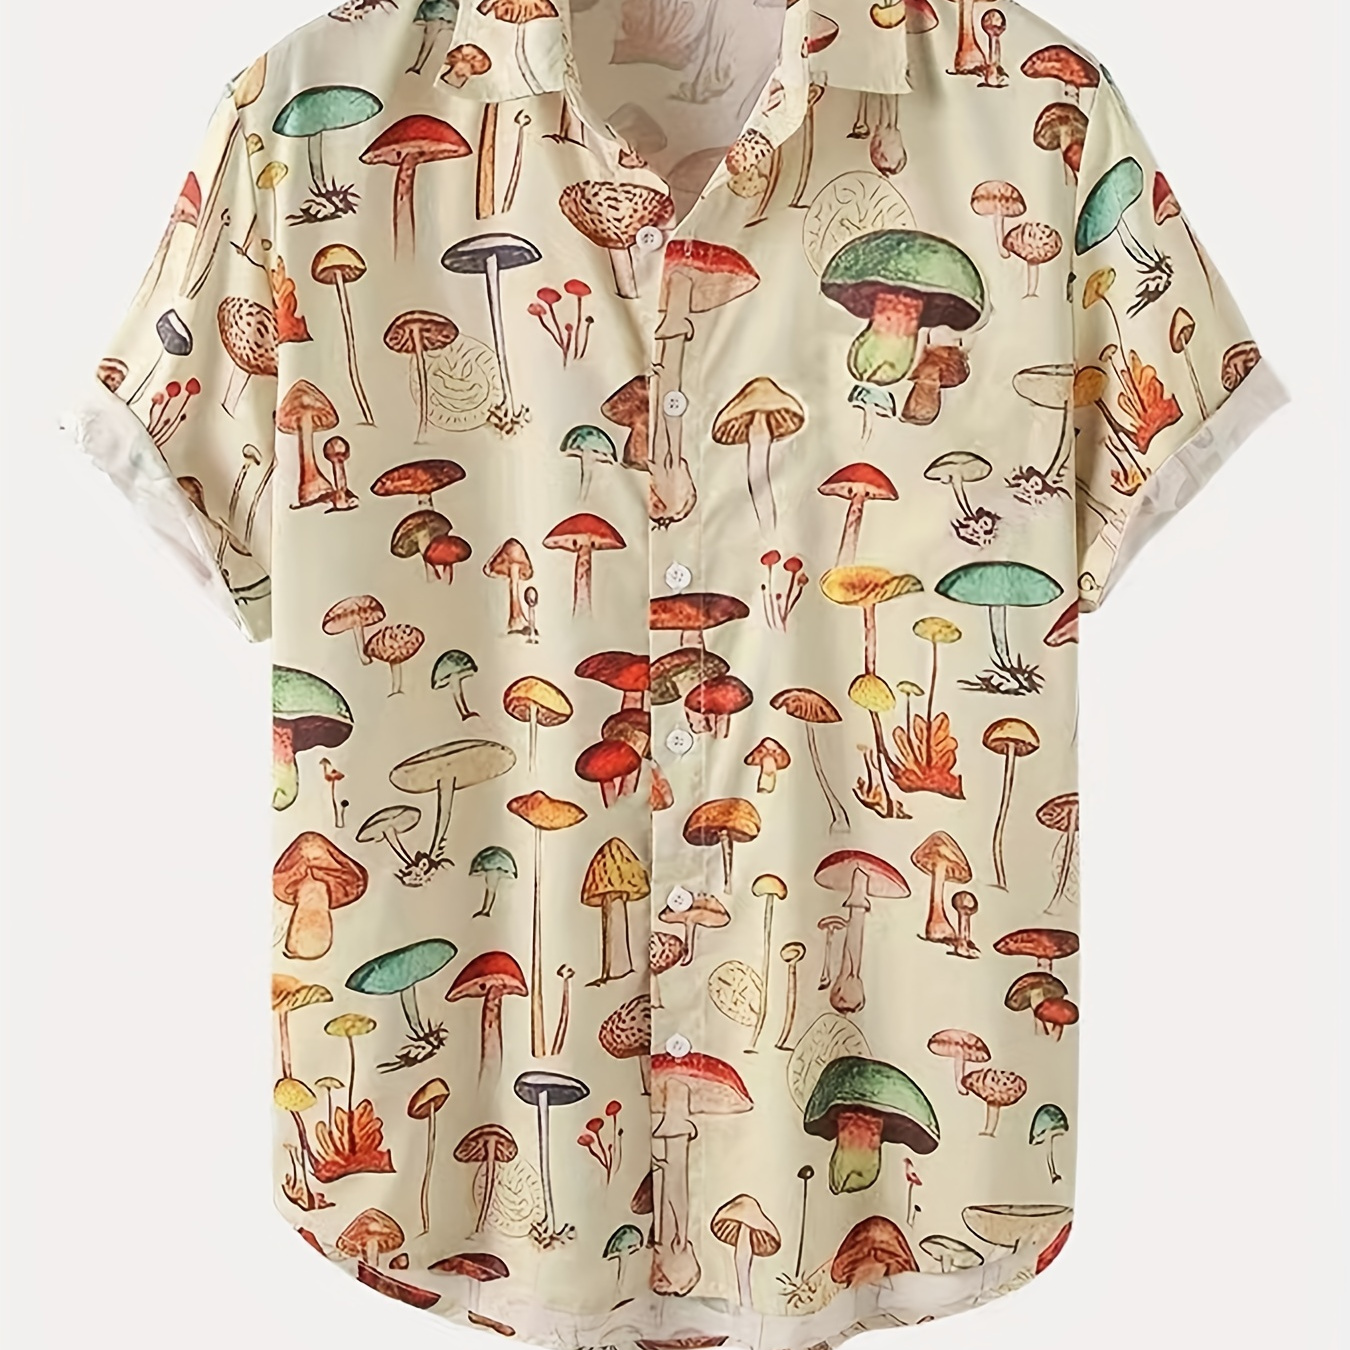 

Cute Mushroom Print Casual Button Up Shirt, Men's Clothes For Spring Summer K-pop